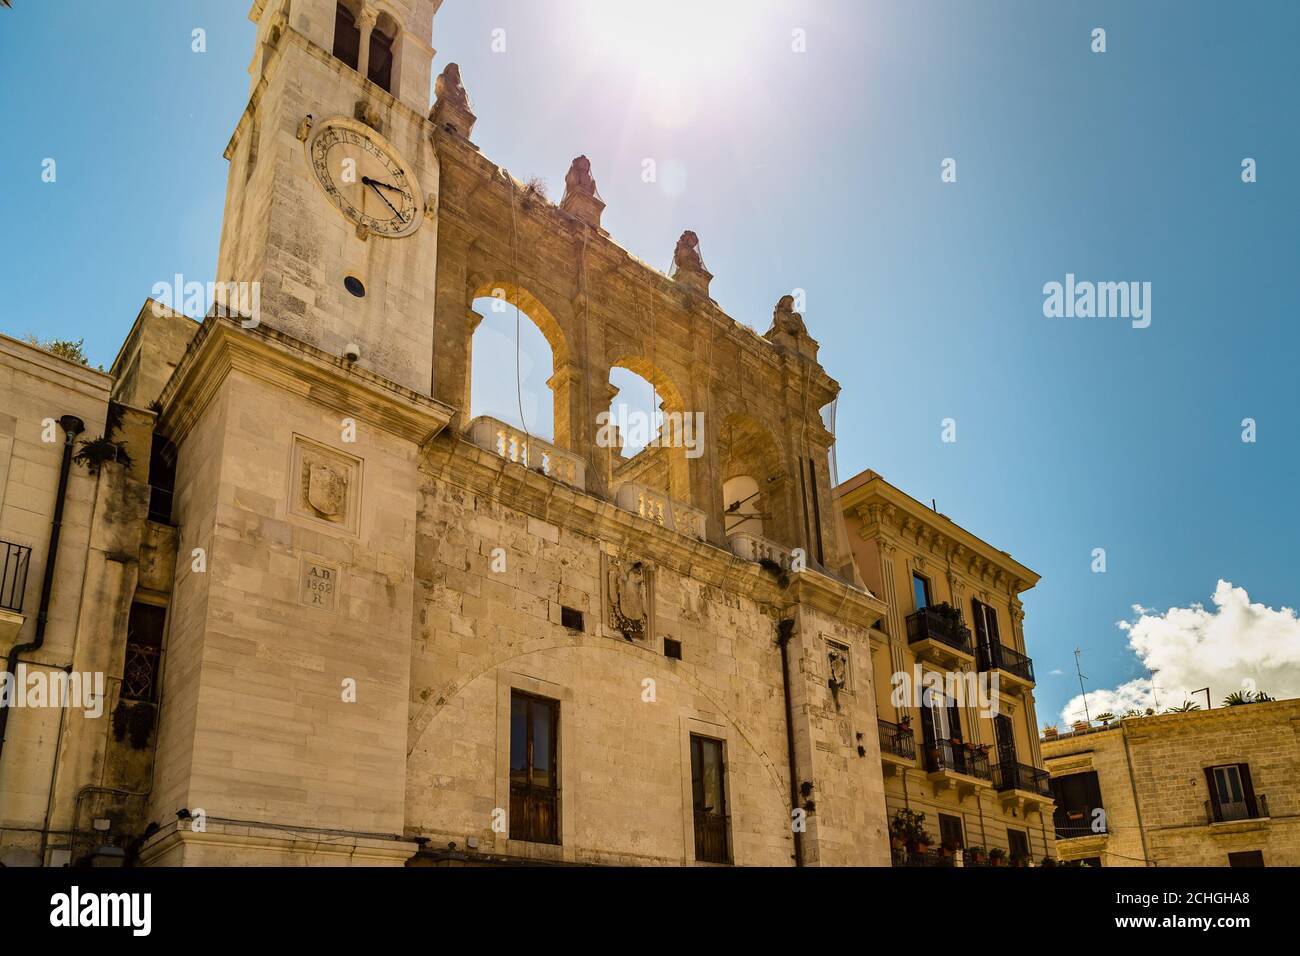 BARI, ITALY - SEPTEMBER 1, 2020: sunlight is enlightening Palazzo del Sedile in Bari Stock Photo